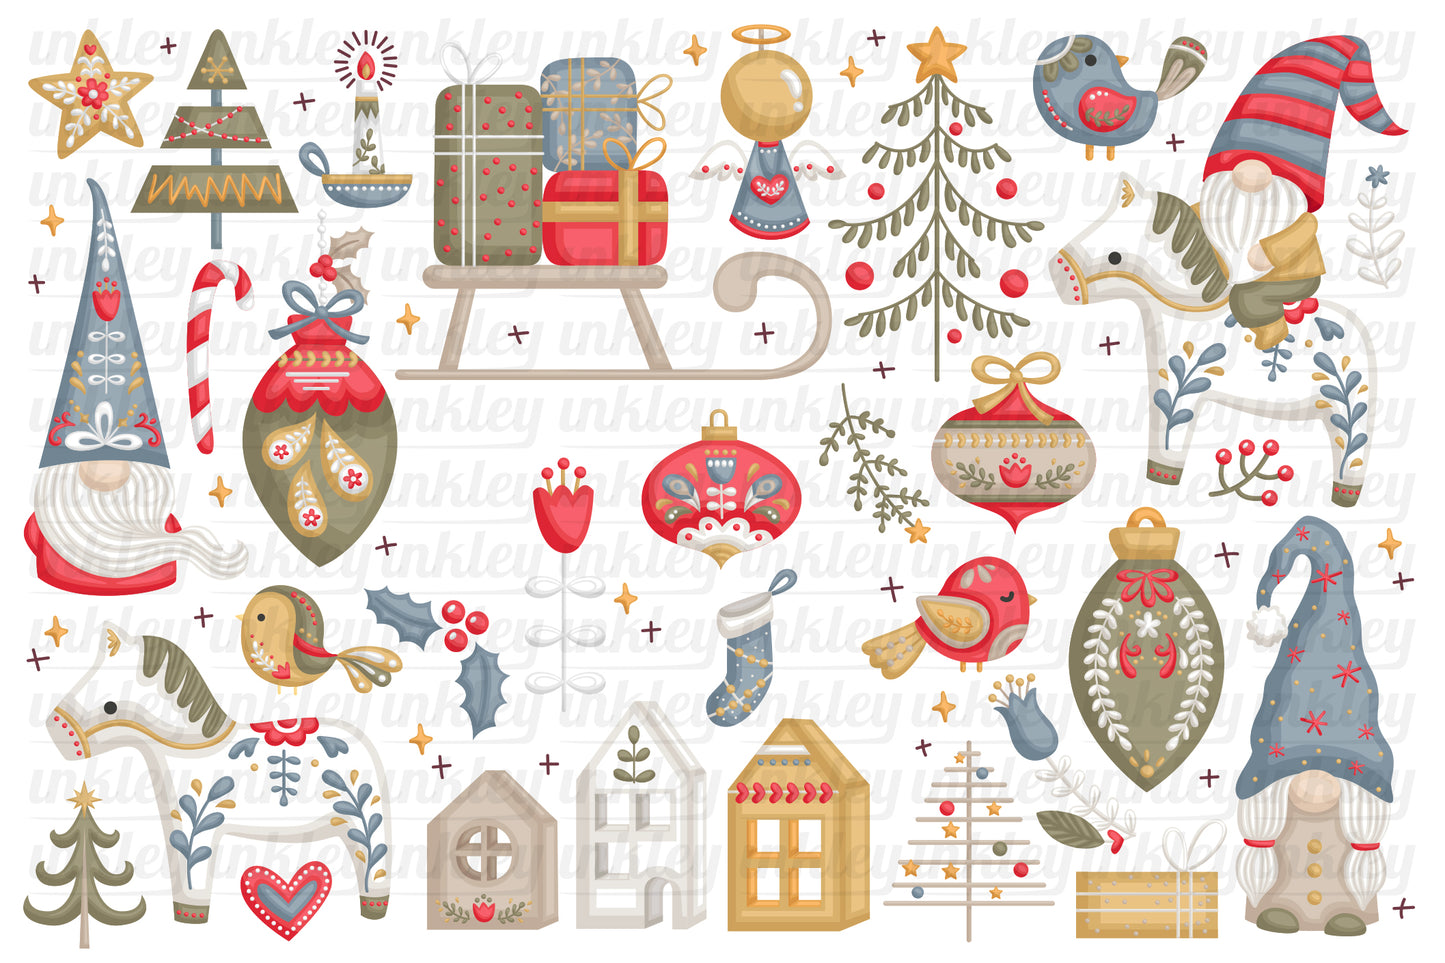 Nordic Christmas Clipart - Cute Christmas Clip Art